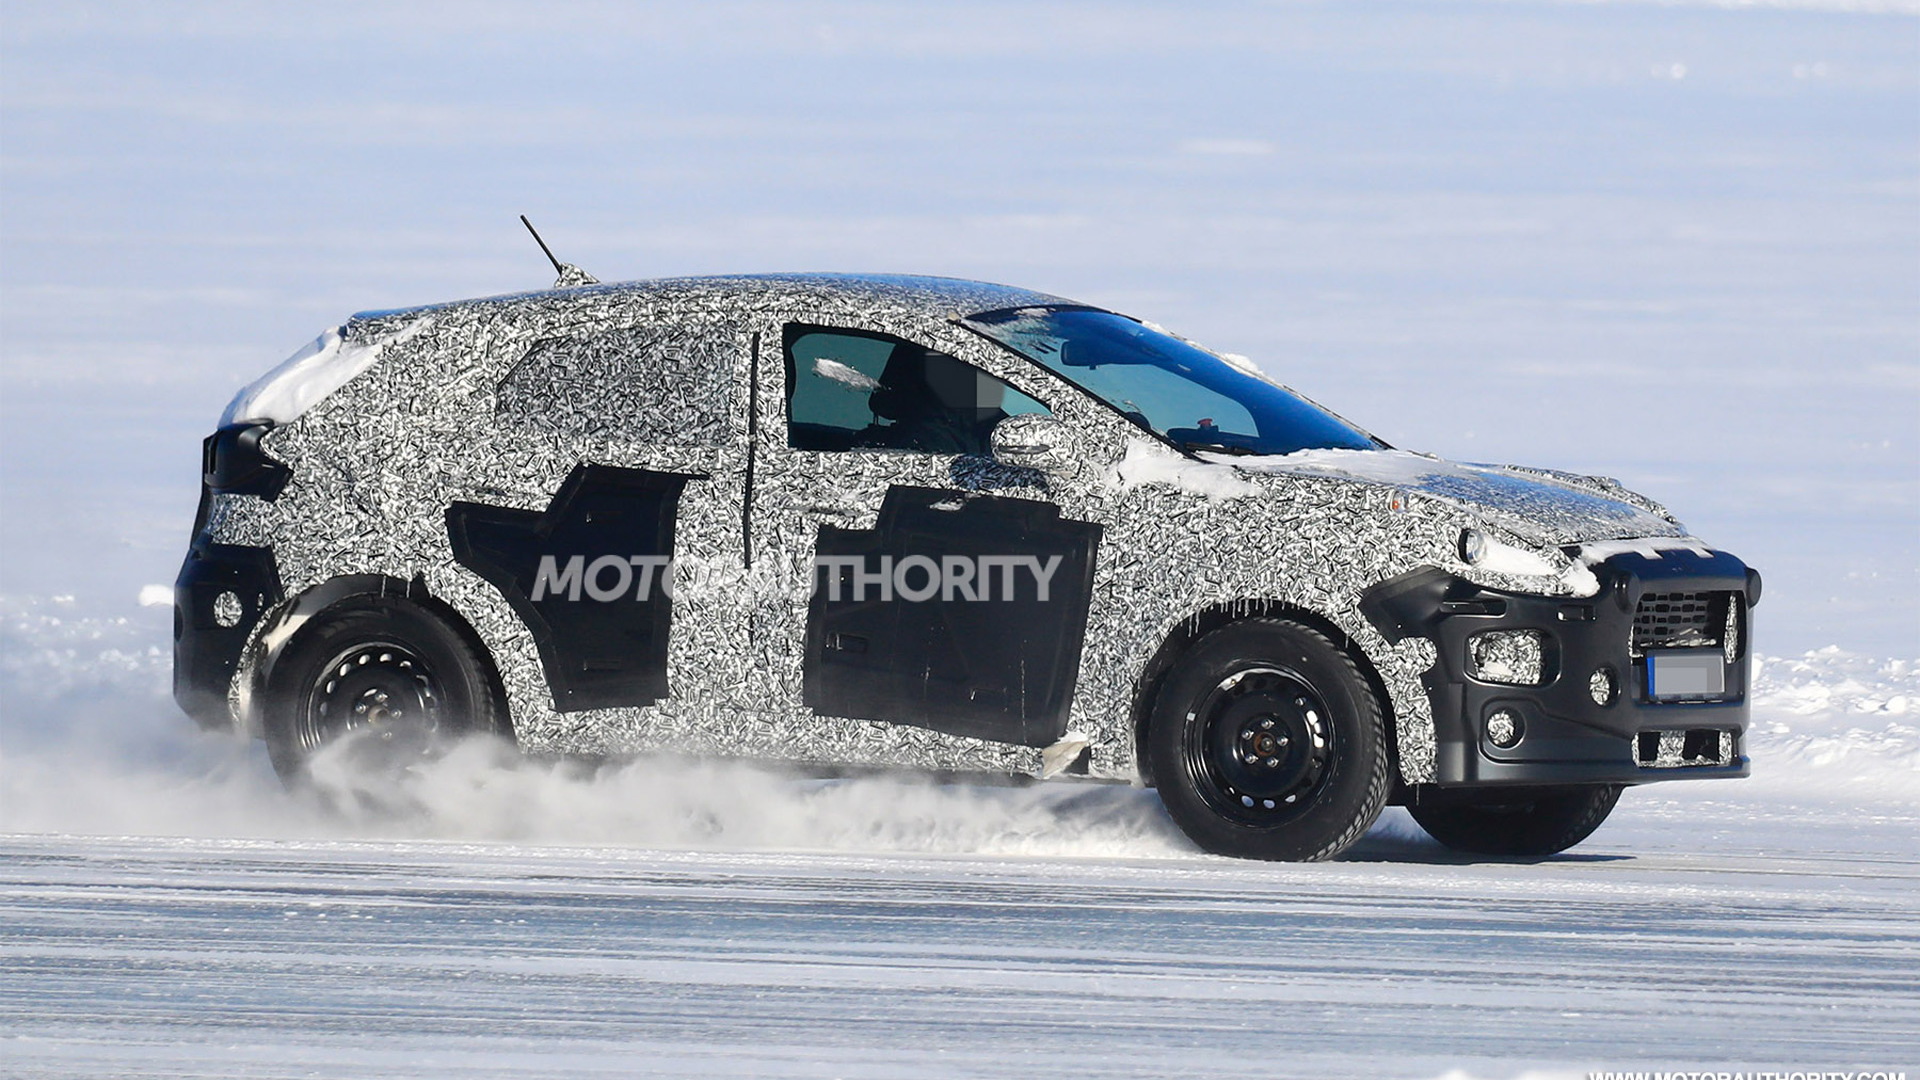 2021 Ford Puma spy shots - Image via S. Baldauf/SB-Medien